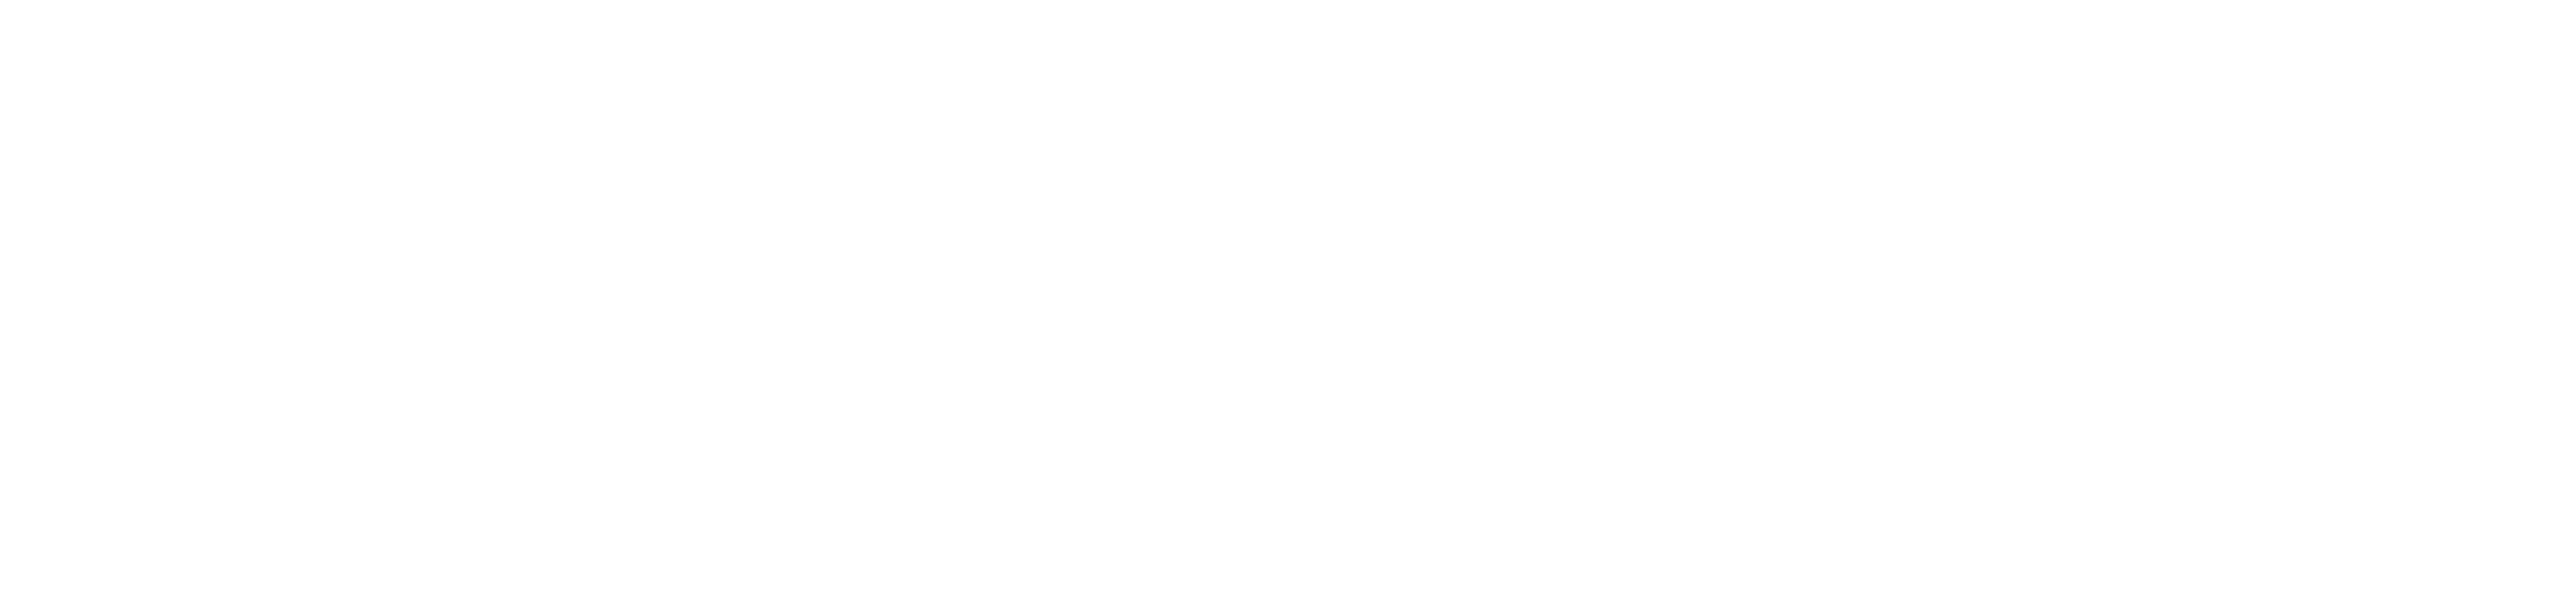 starware logo white